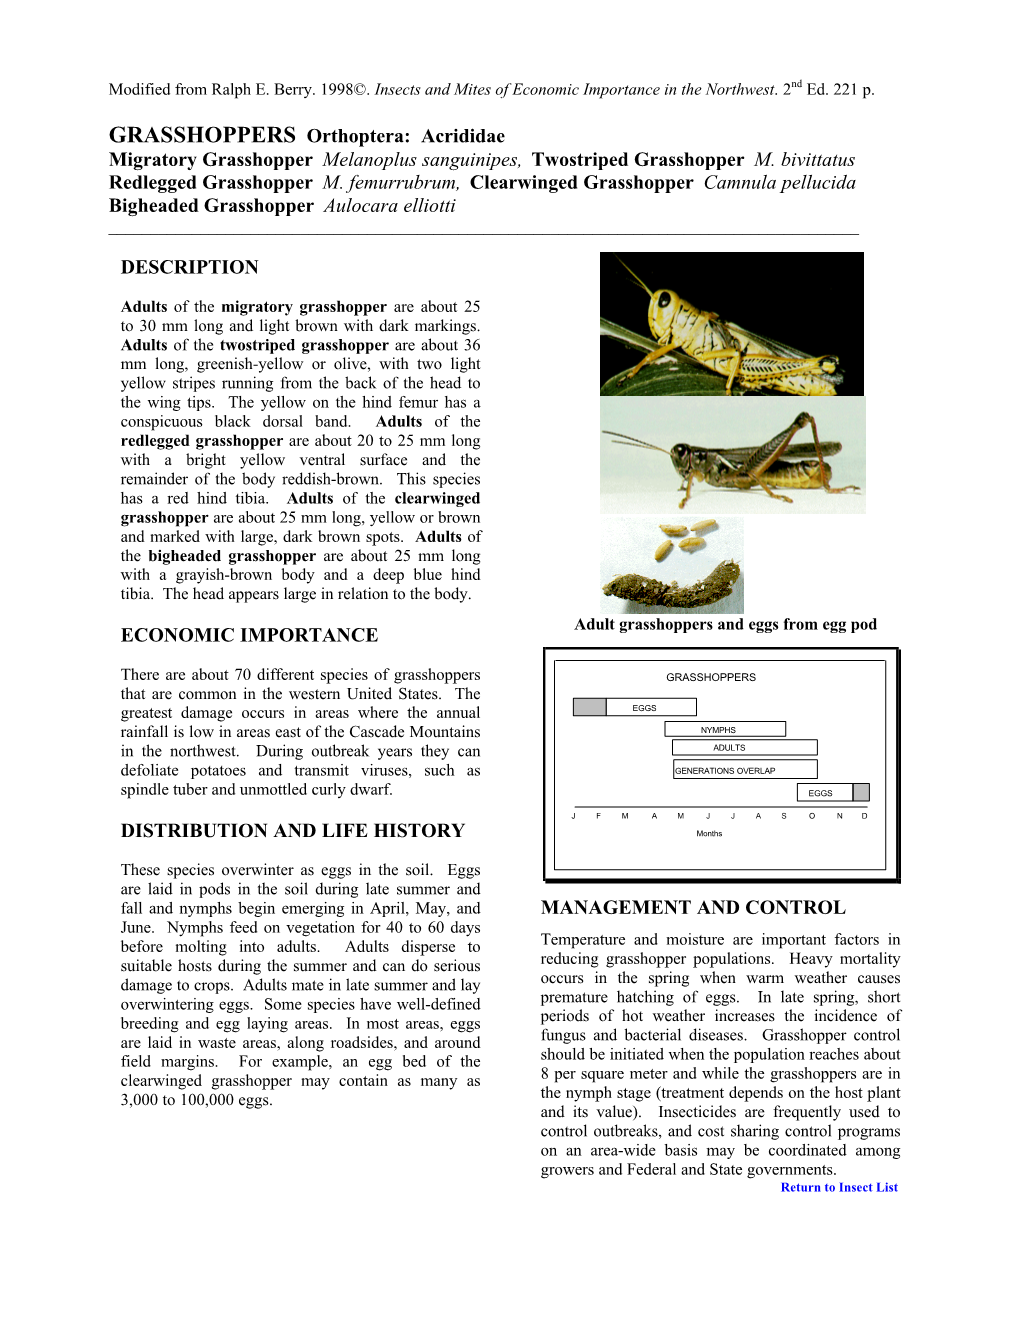 GRASSHOPPERS Orthoptera: Acrididae Migratory Grasshopper Melanoplus Sanguinipes, Twostriped Grasshopper M